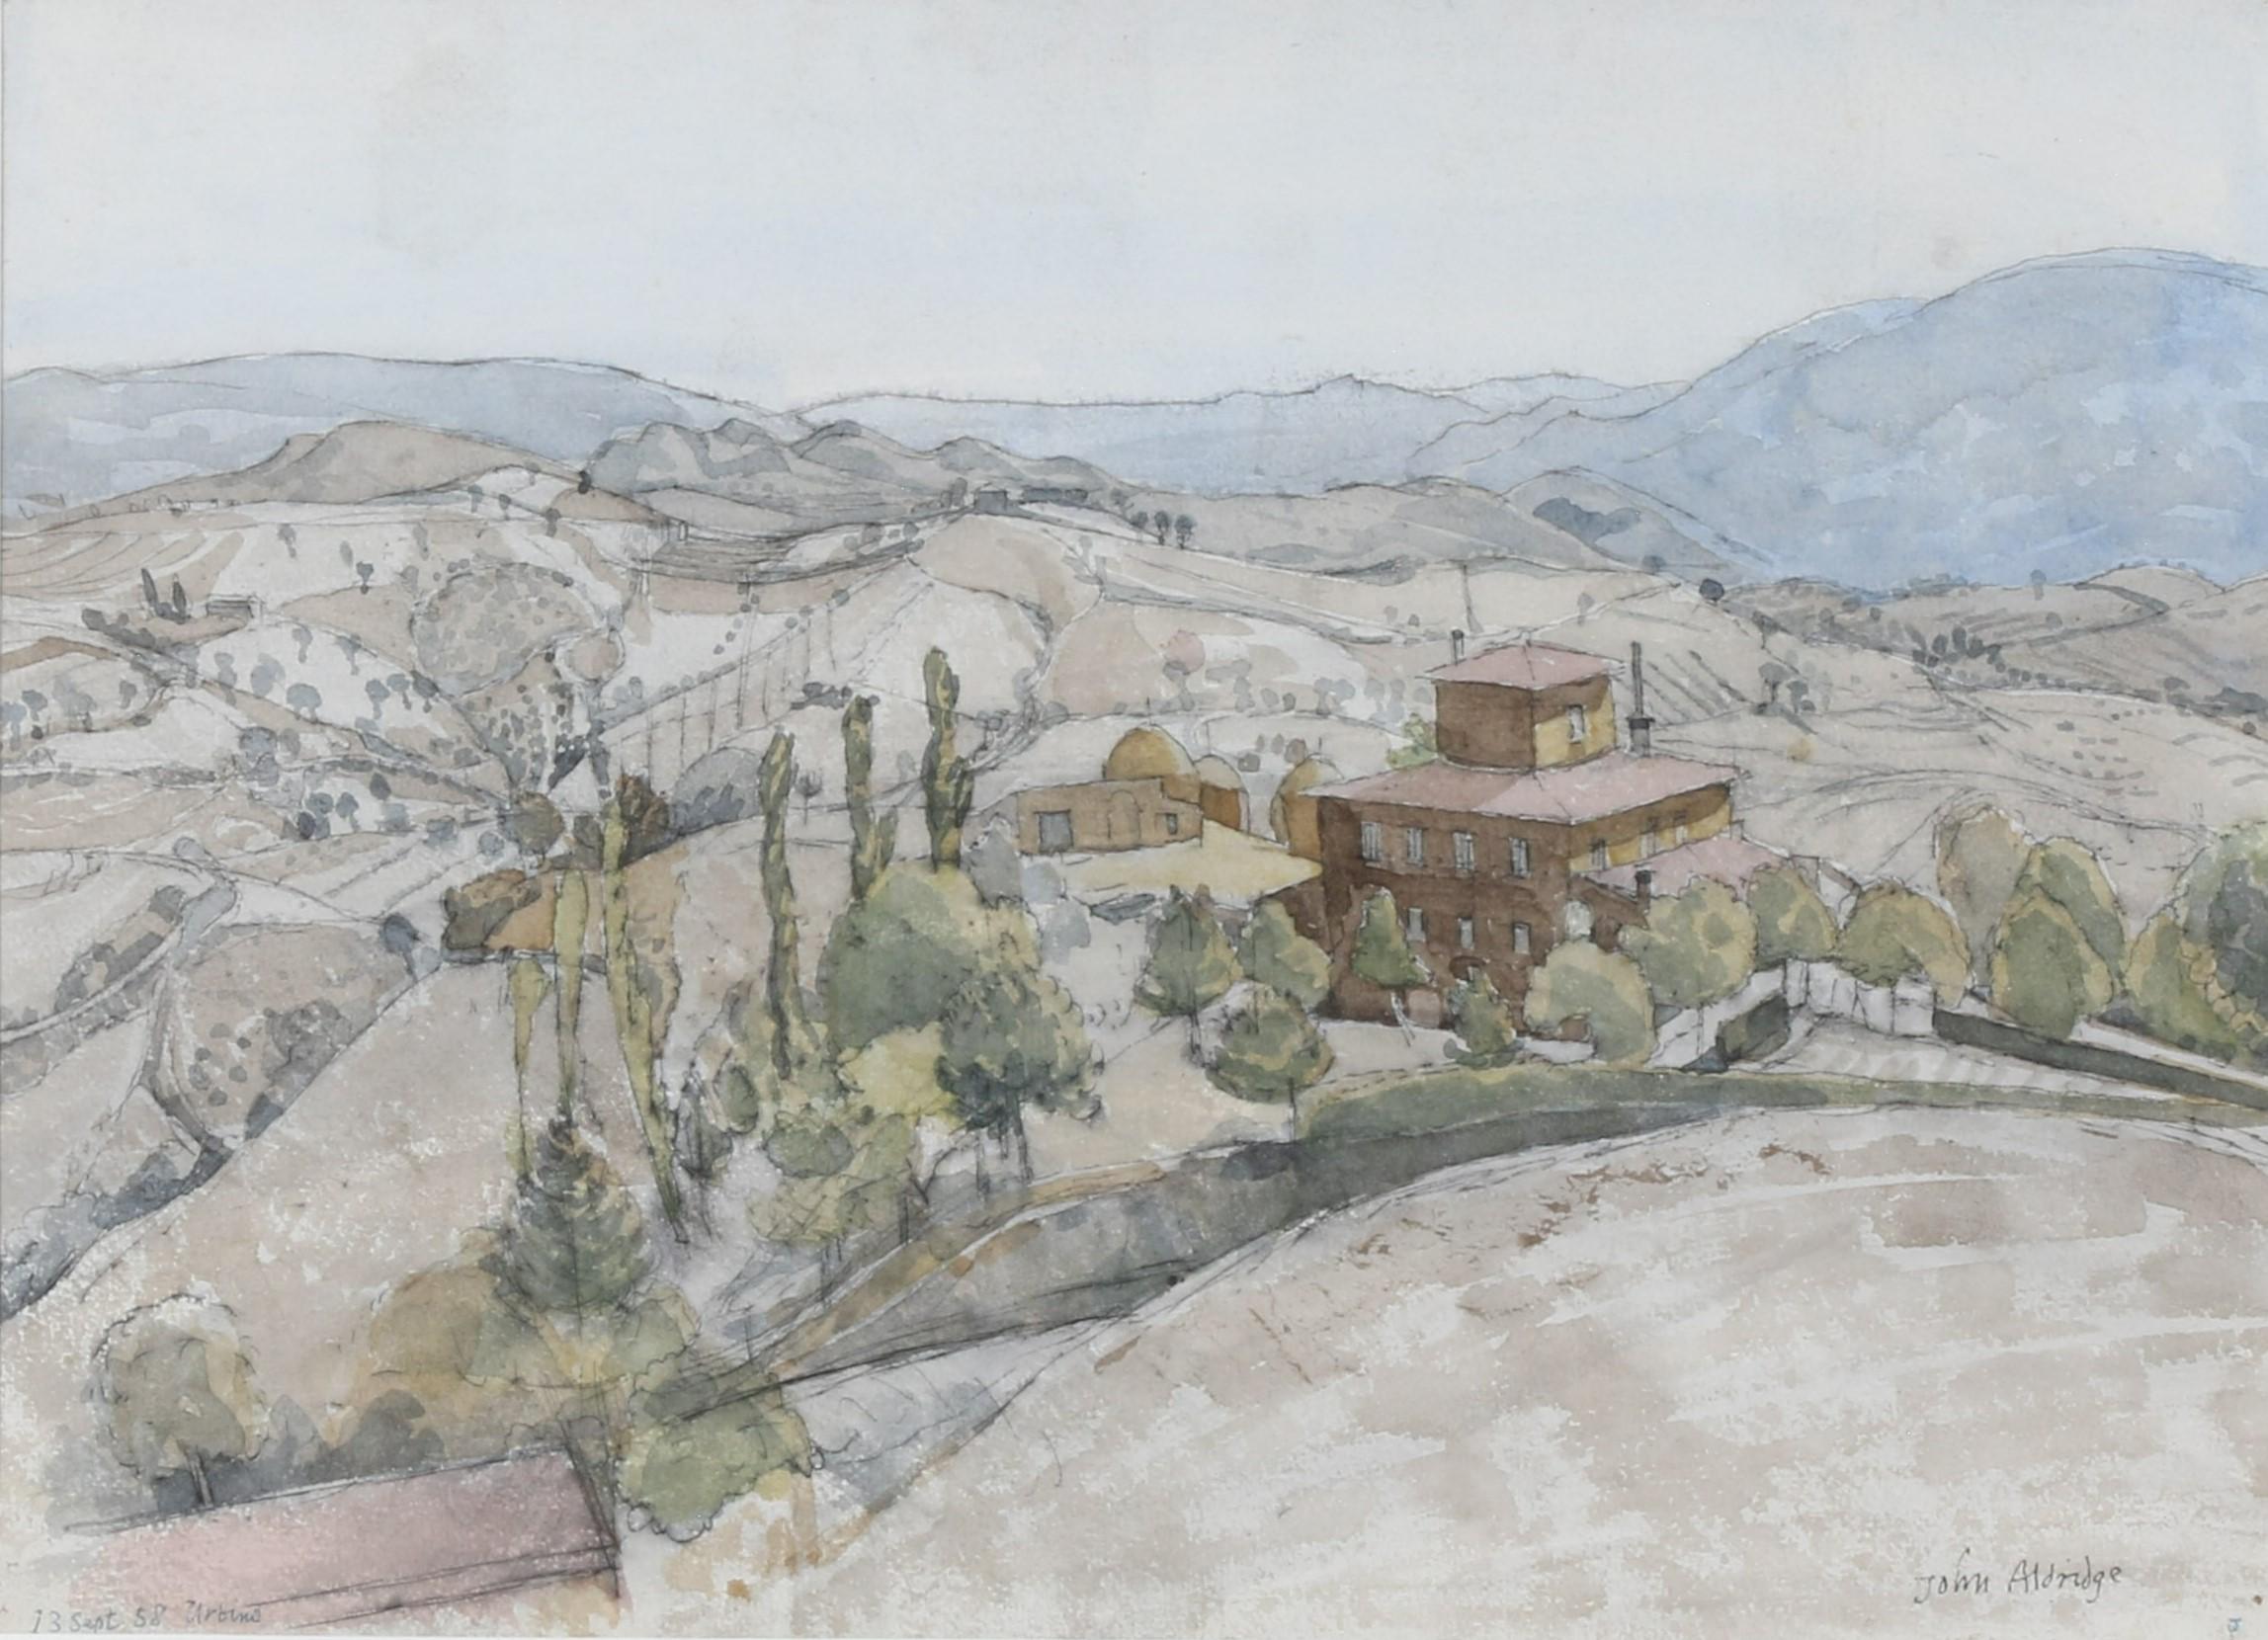 Urbino, Italie, septembre 1958. - Painting de John Aldridge